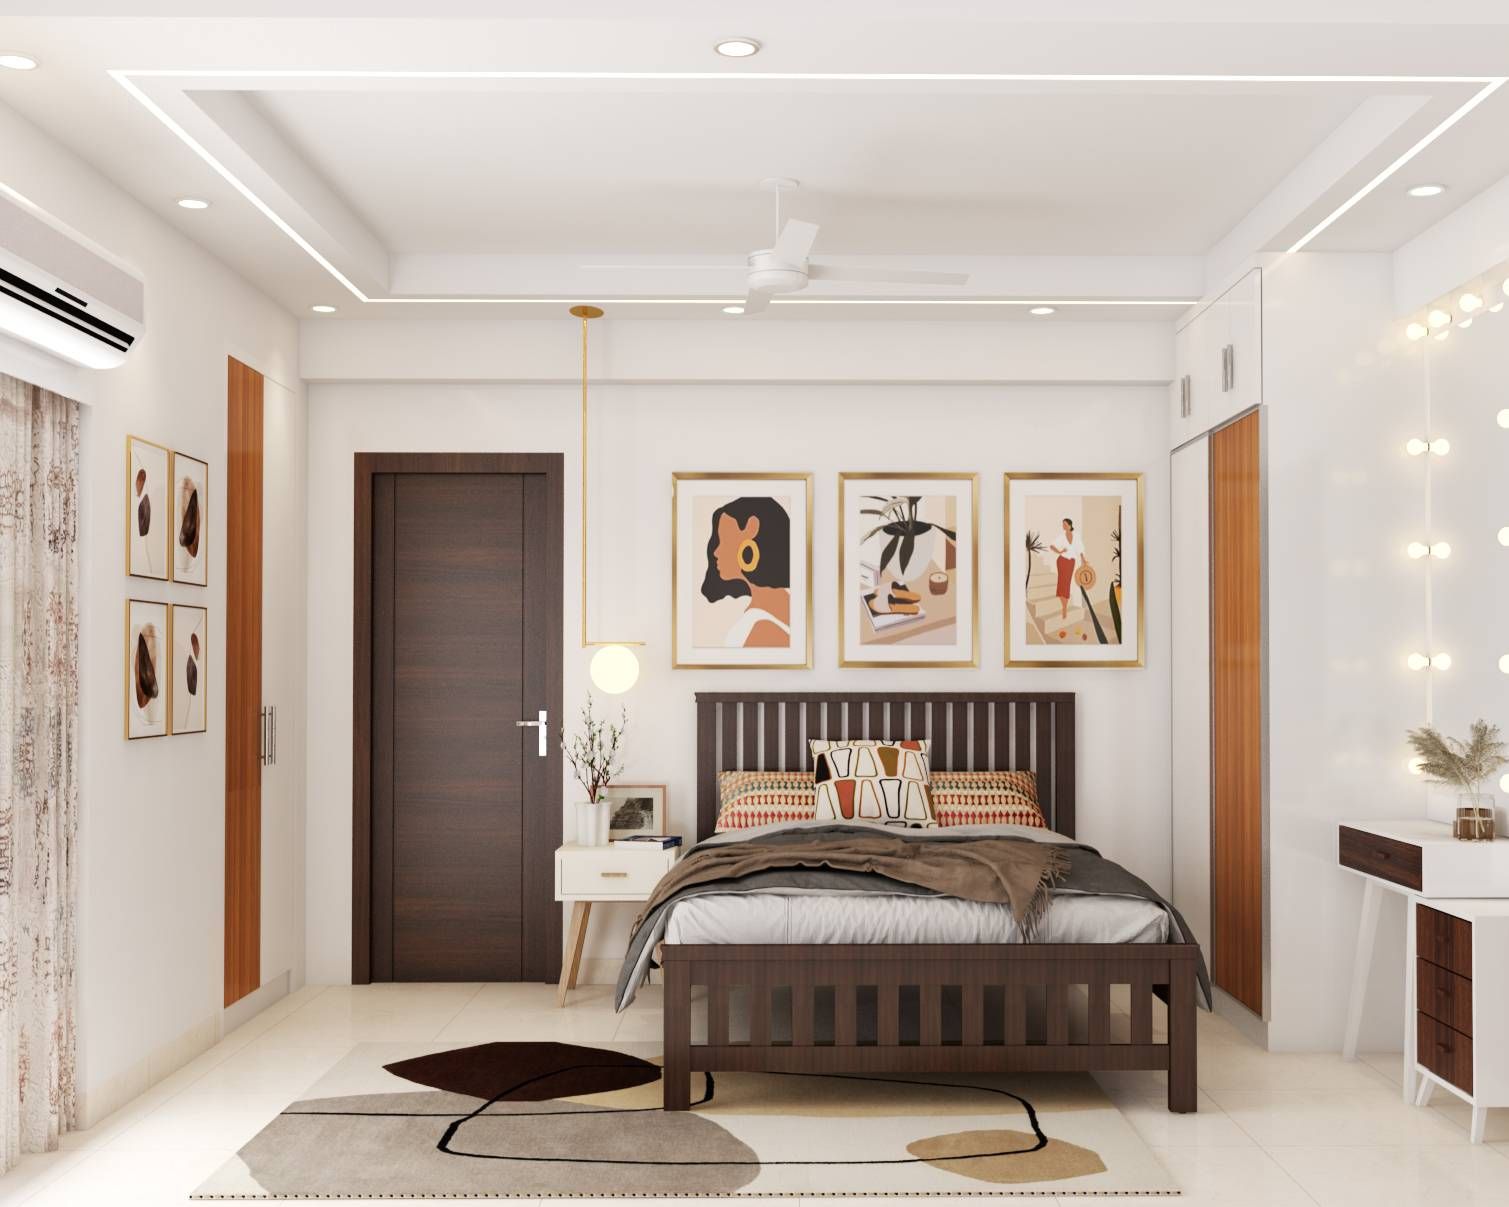 Scandinavian Style Master Bedroom Design With Elegant Decor